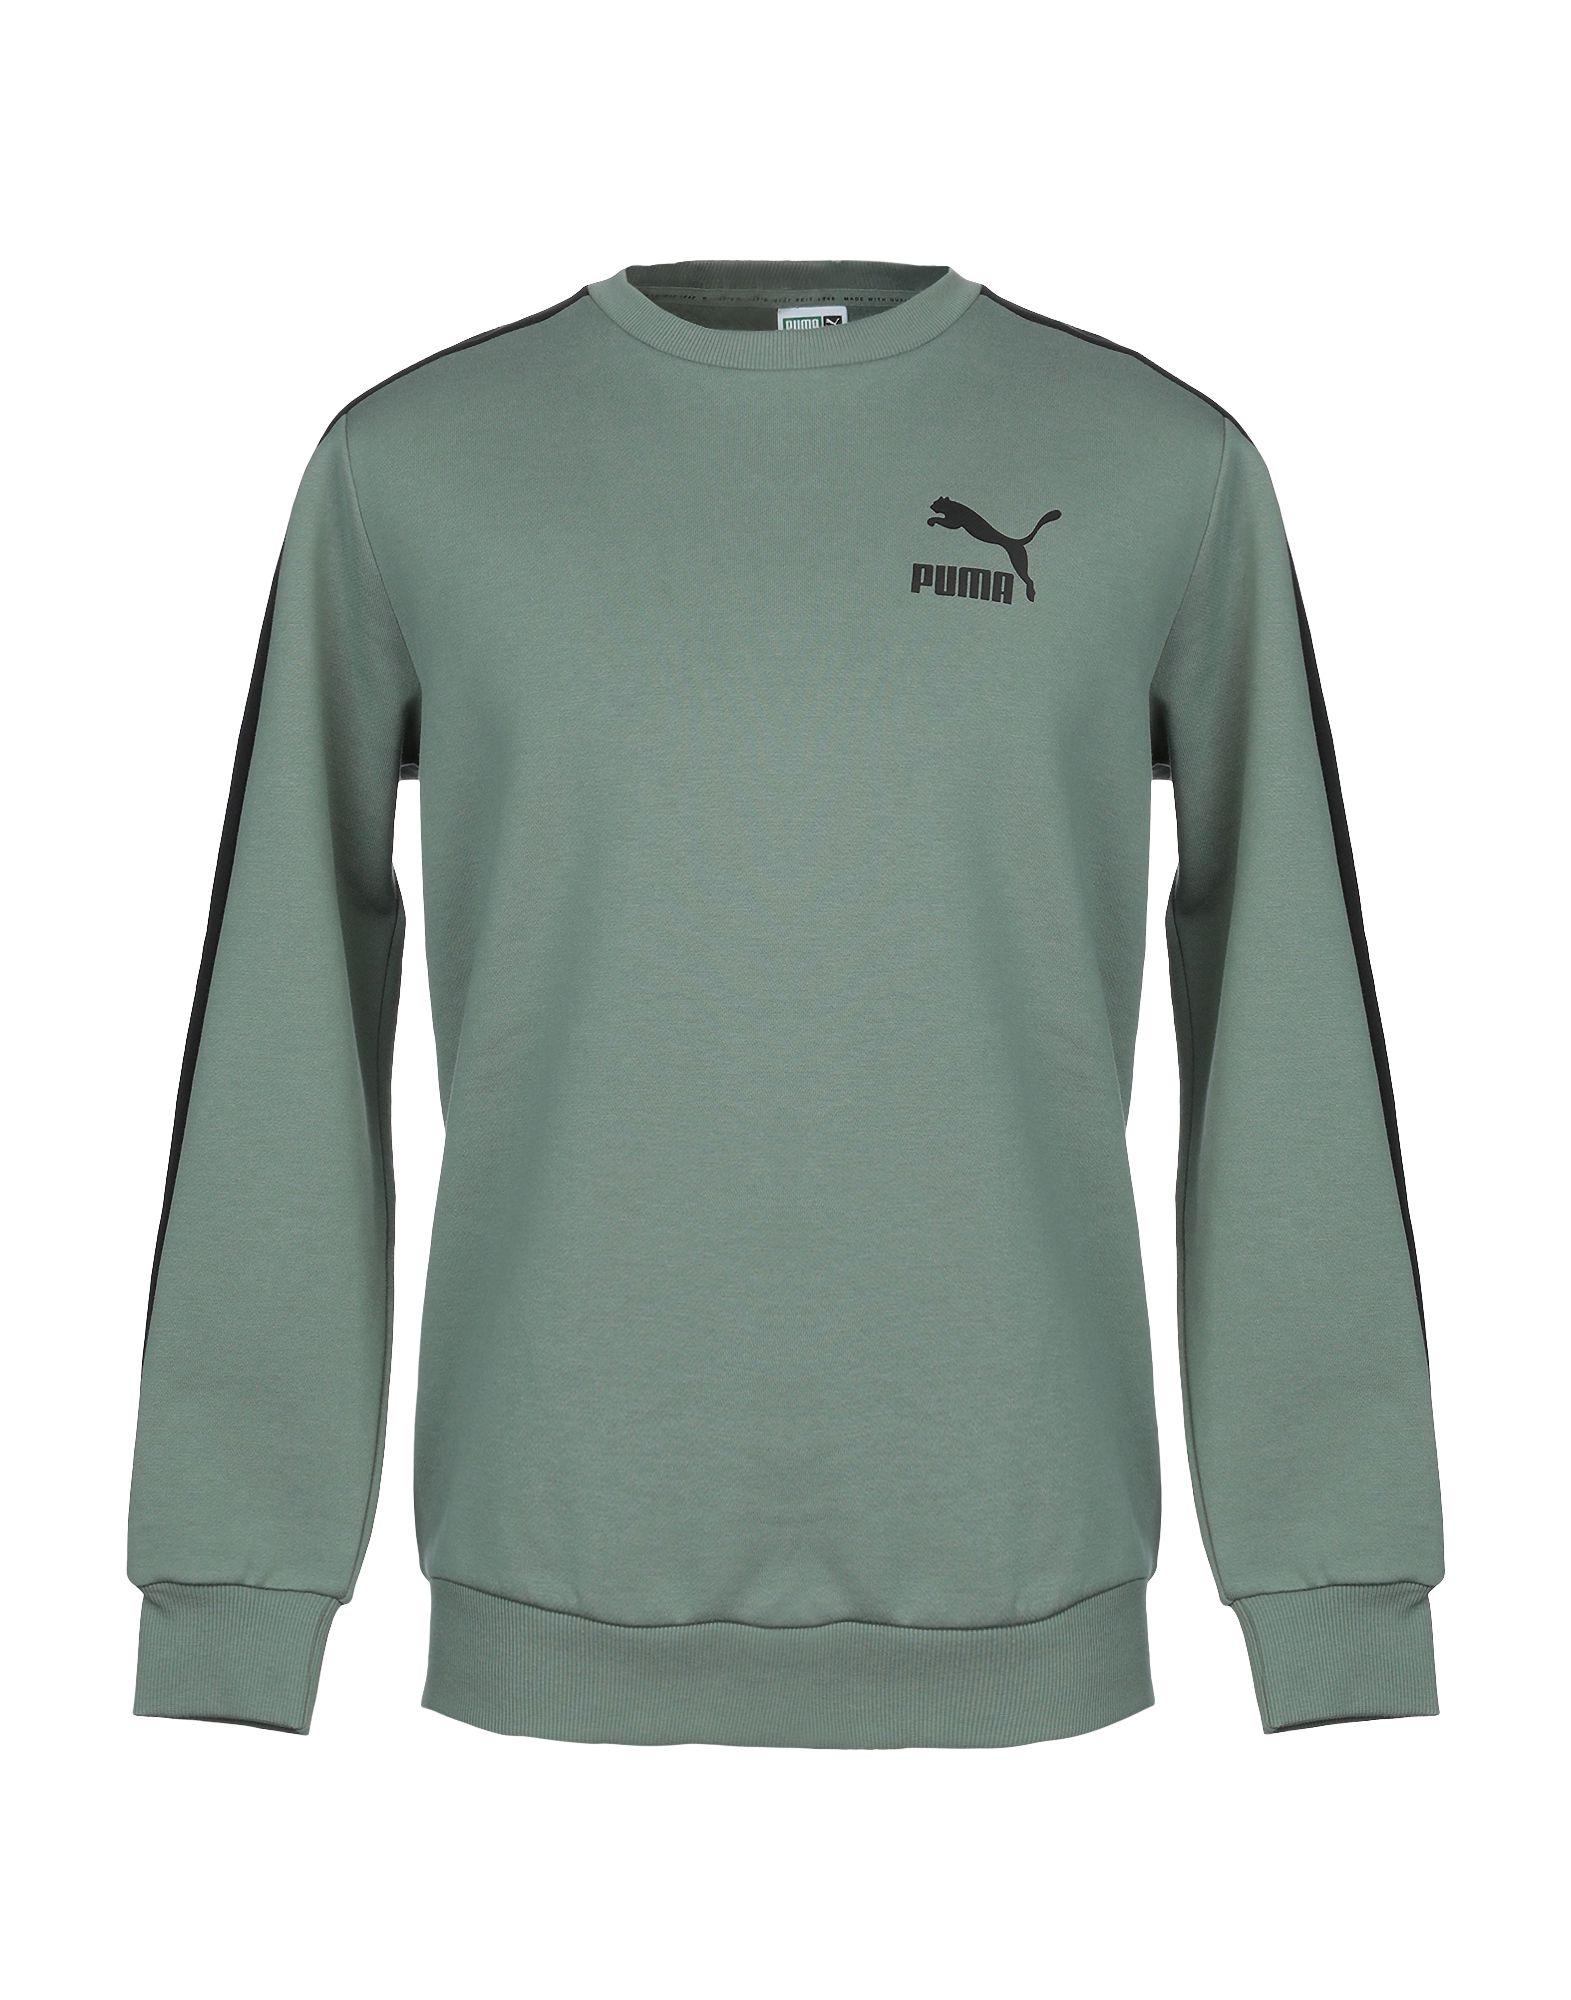 PUMA Fleece Sweatshirt in Military Green (Green) for Men - Lyst